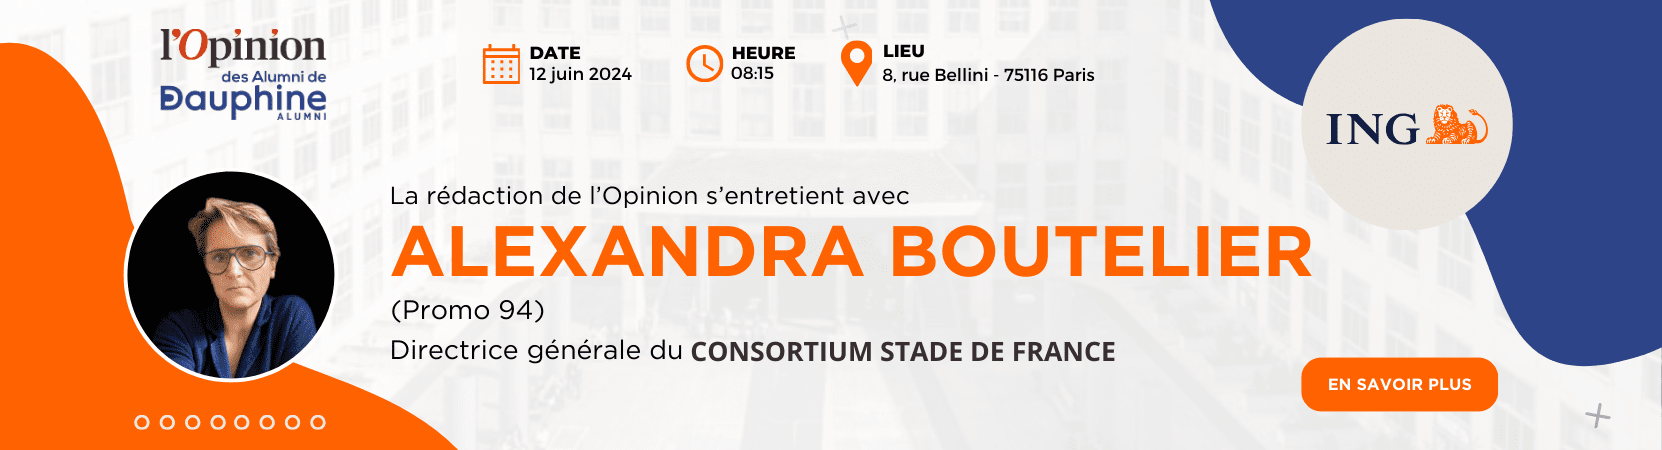 L'Opinion des Alumni - Alexandra Boutelier